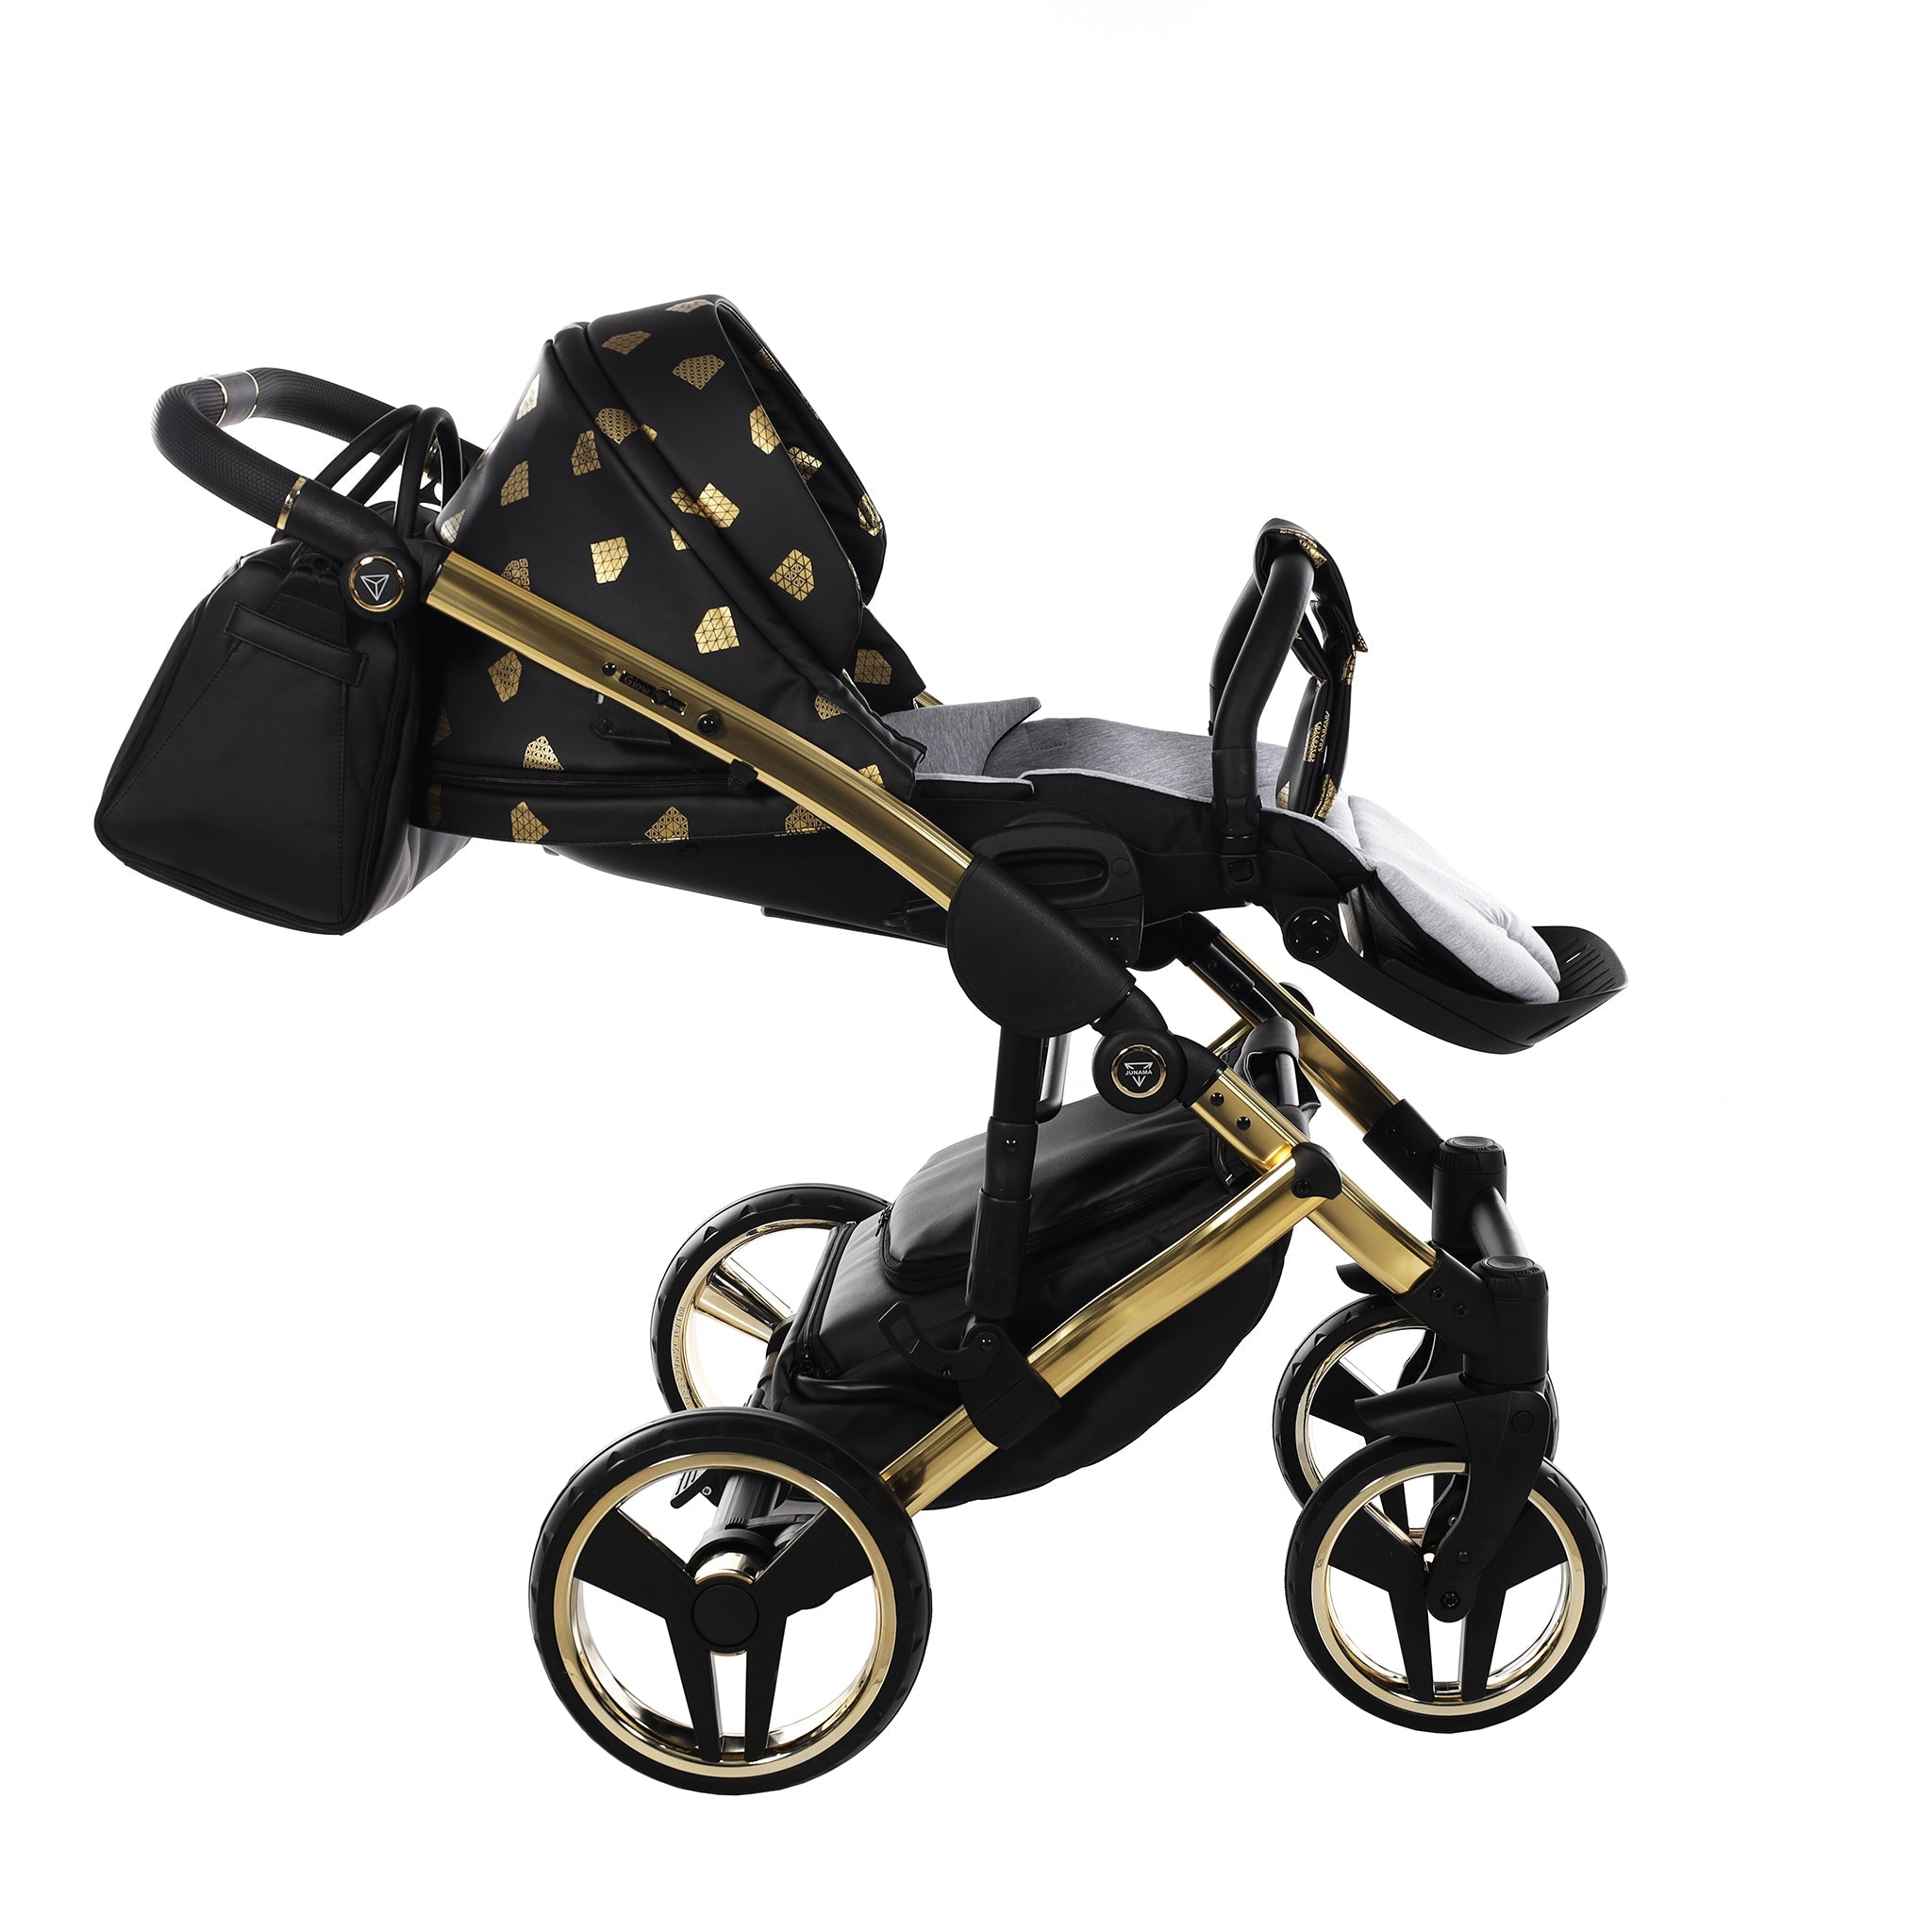 Junama GLOW, baby prams or stroller 2 in 1 - Gold and Black, Code number: JUNGLW05